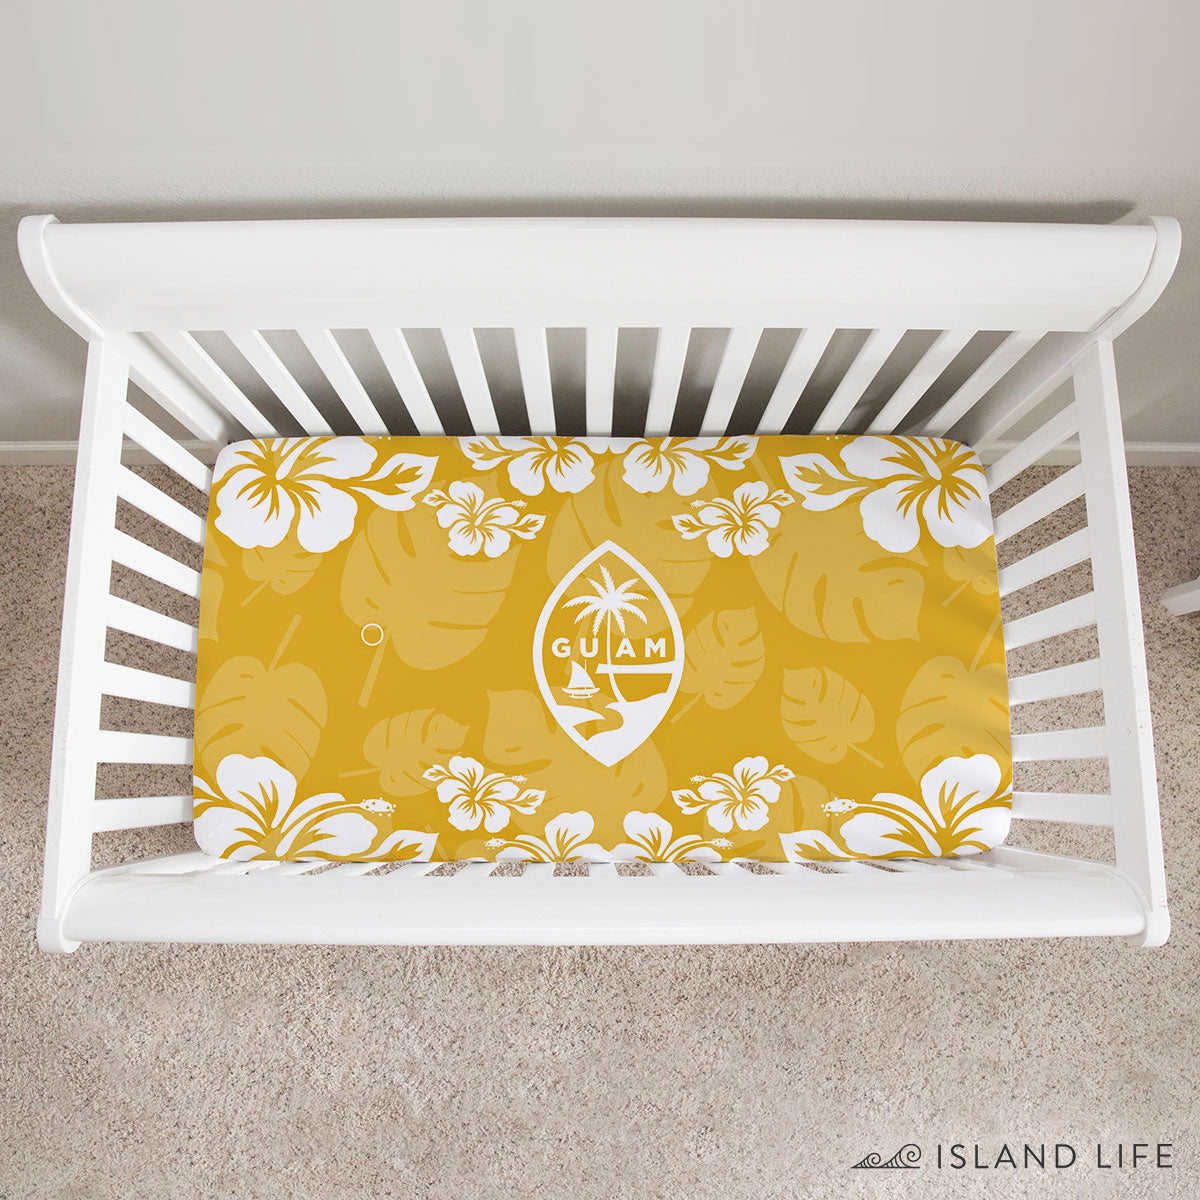 Guam Seal Yellow Gold Hibiscus Baby Crib Sheet